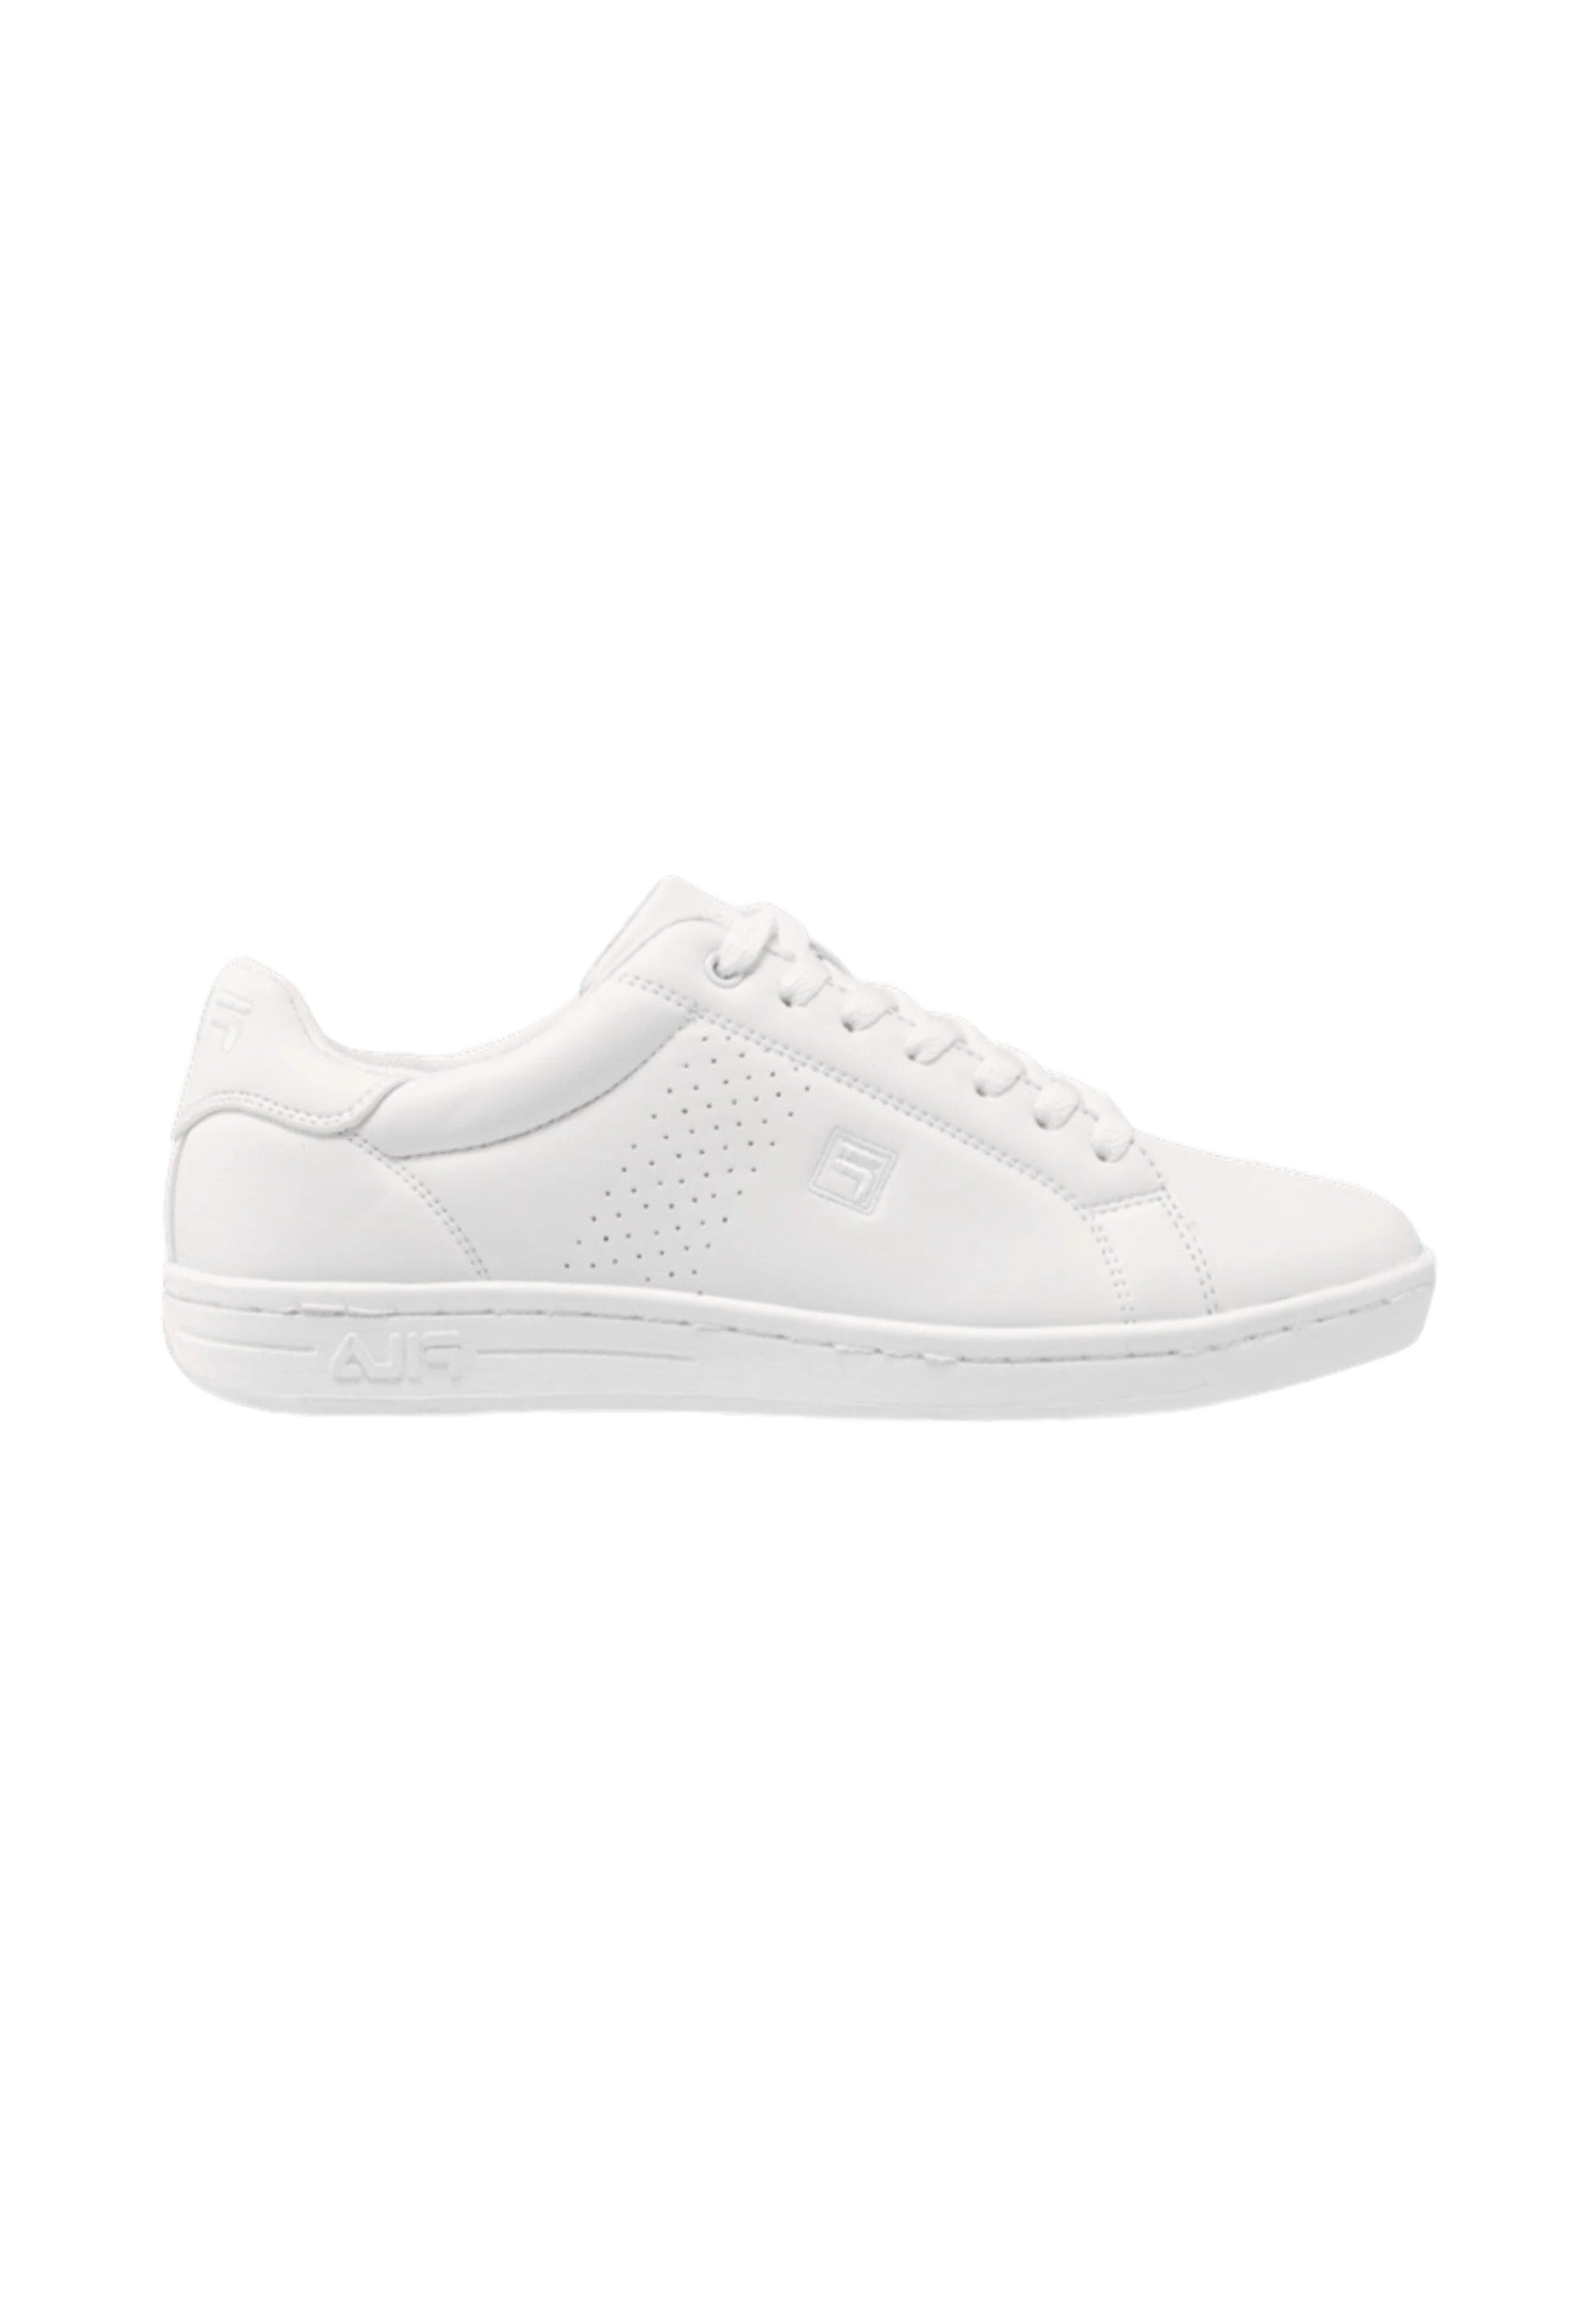 Ffm0298 White sneakers